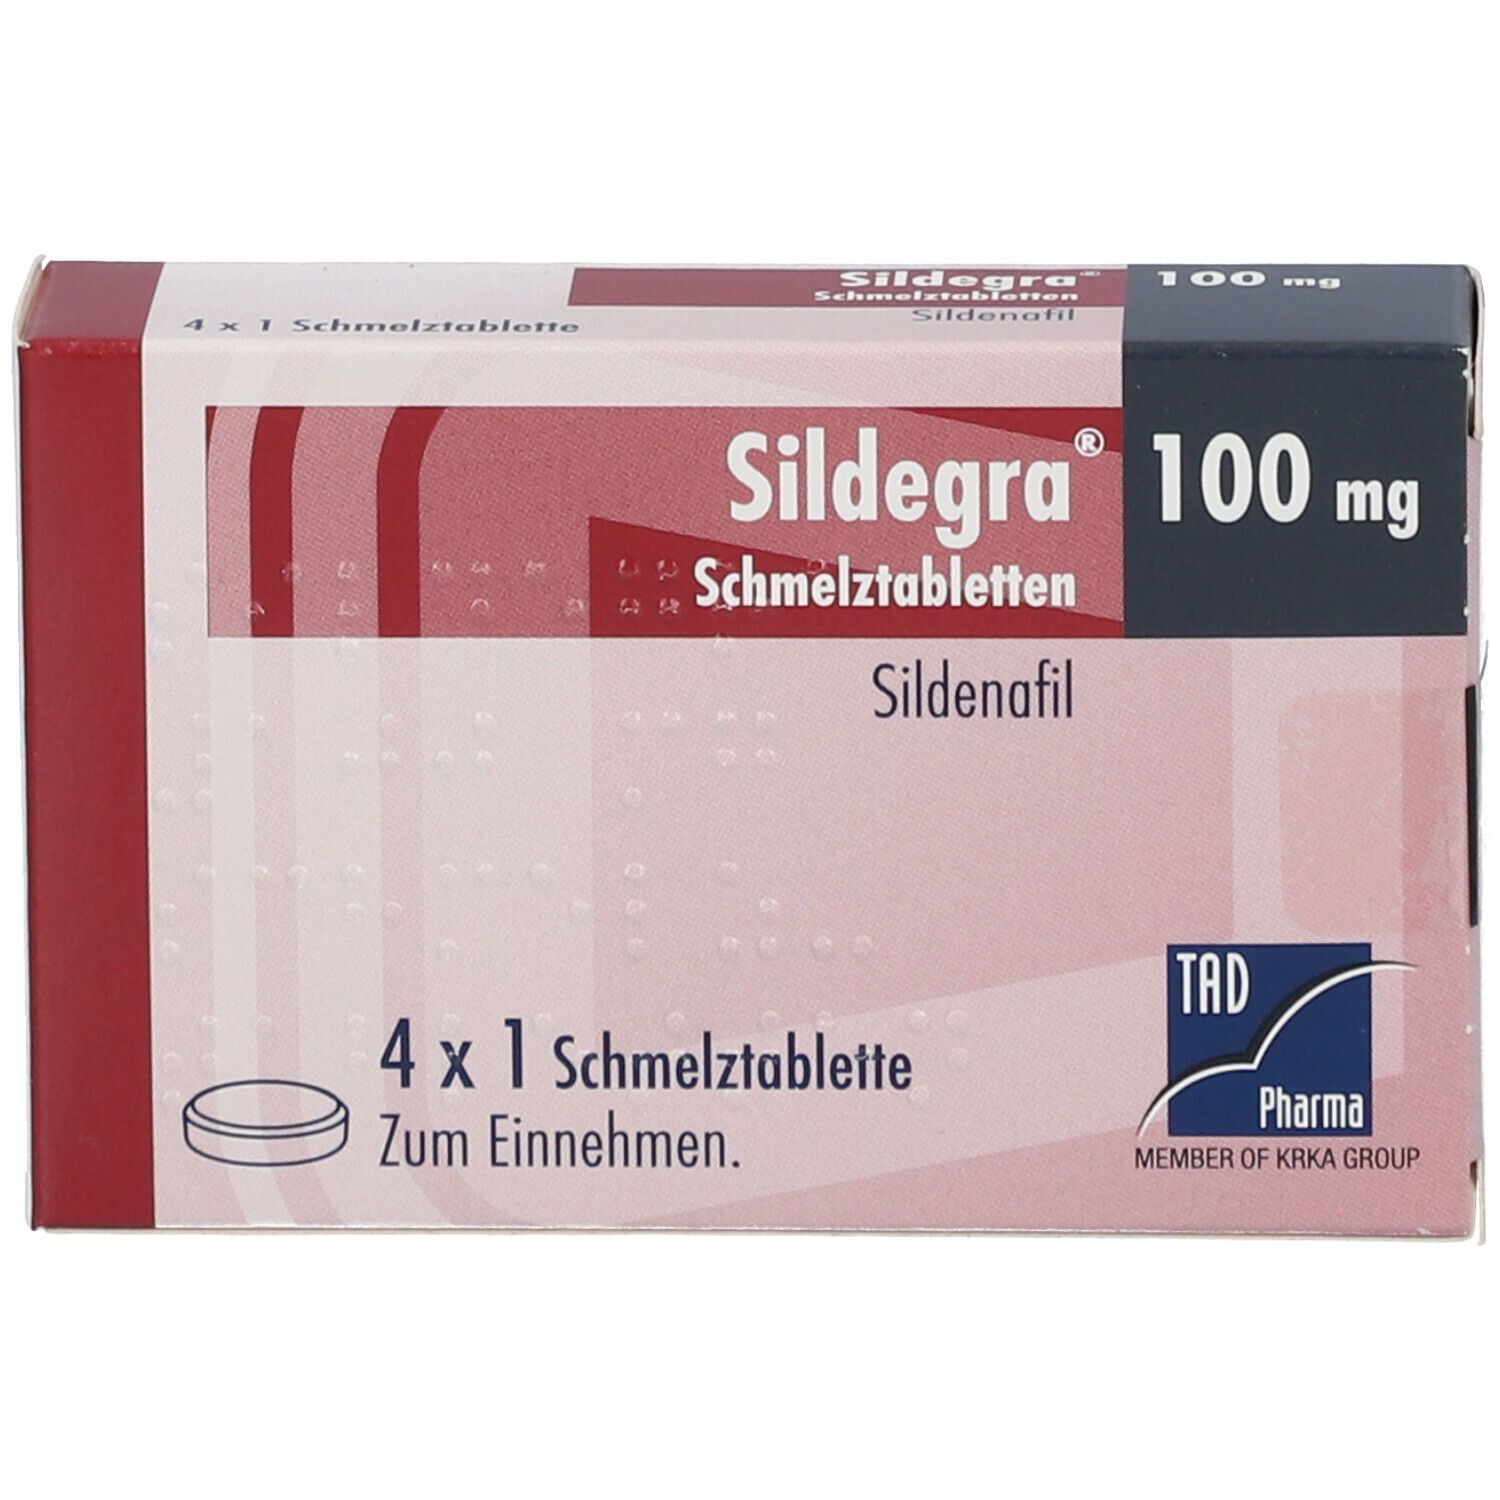 Sildegra® 100 mg